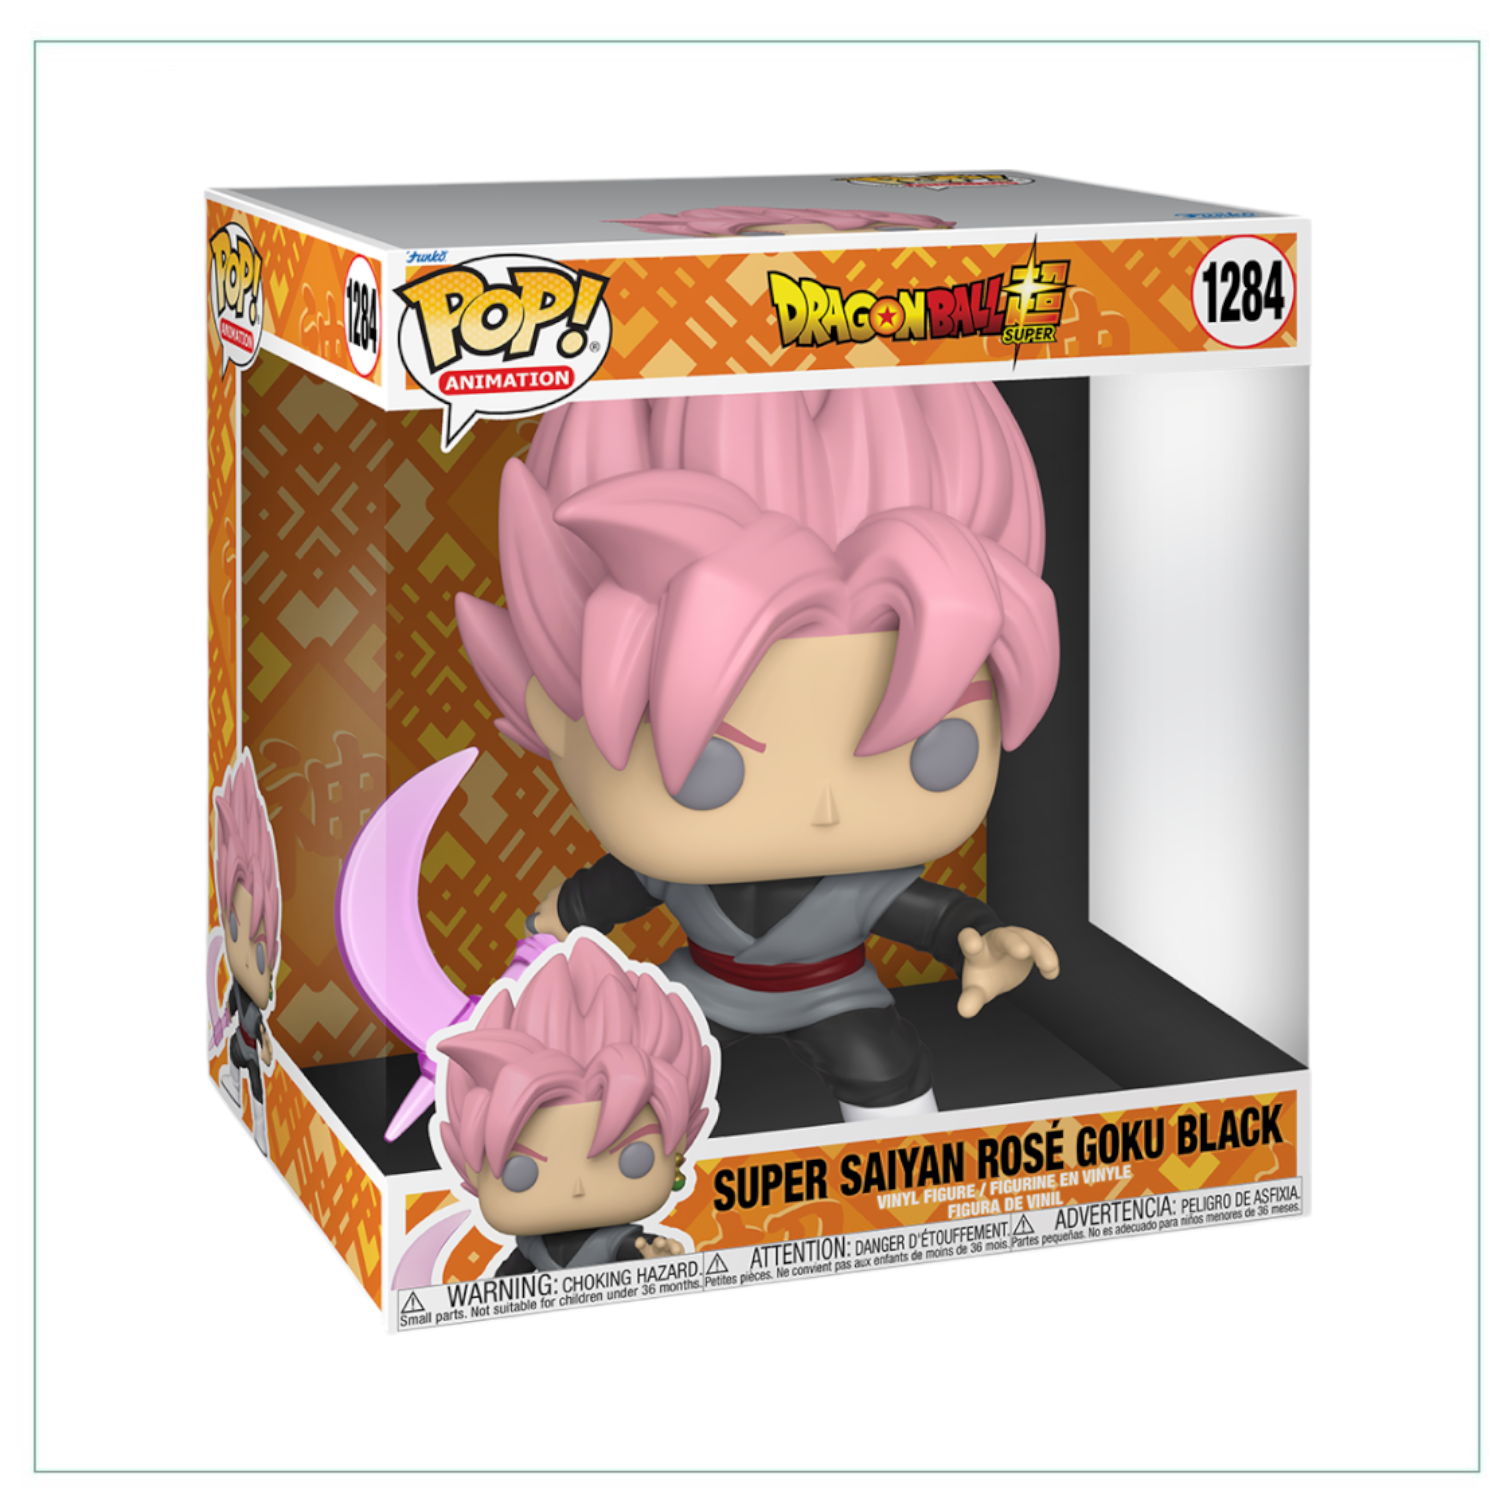 Super Saiyan Rosé Goku Black #1284 10” Funko Pop! - DragonBall Z